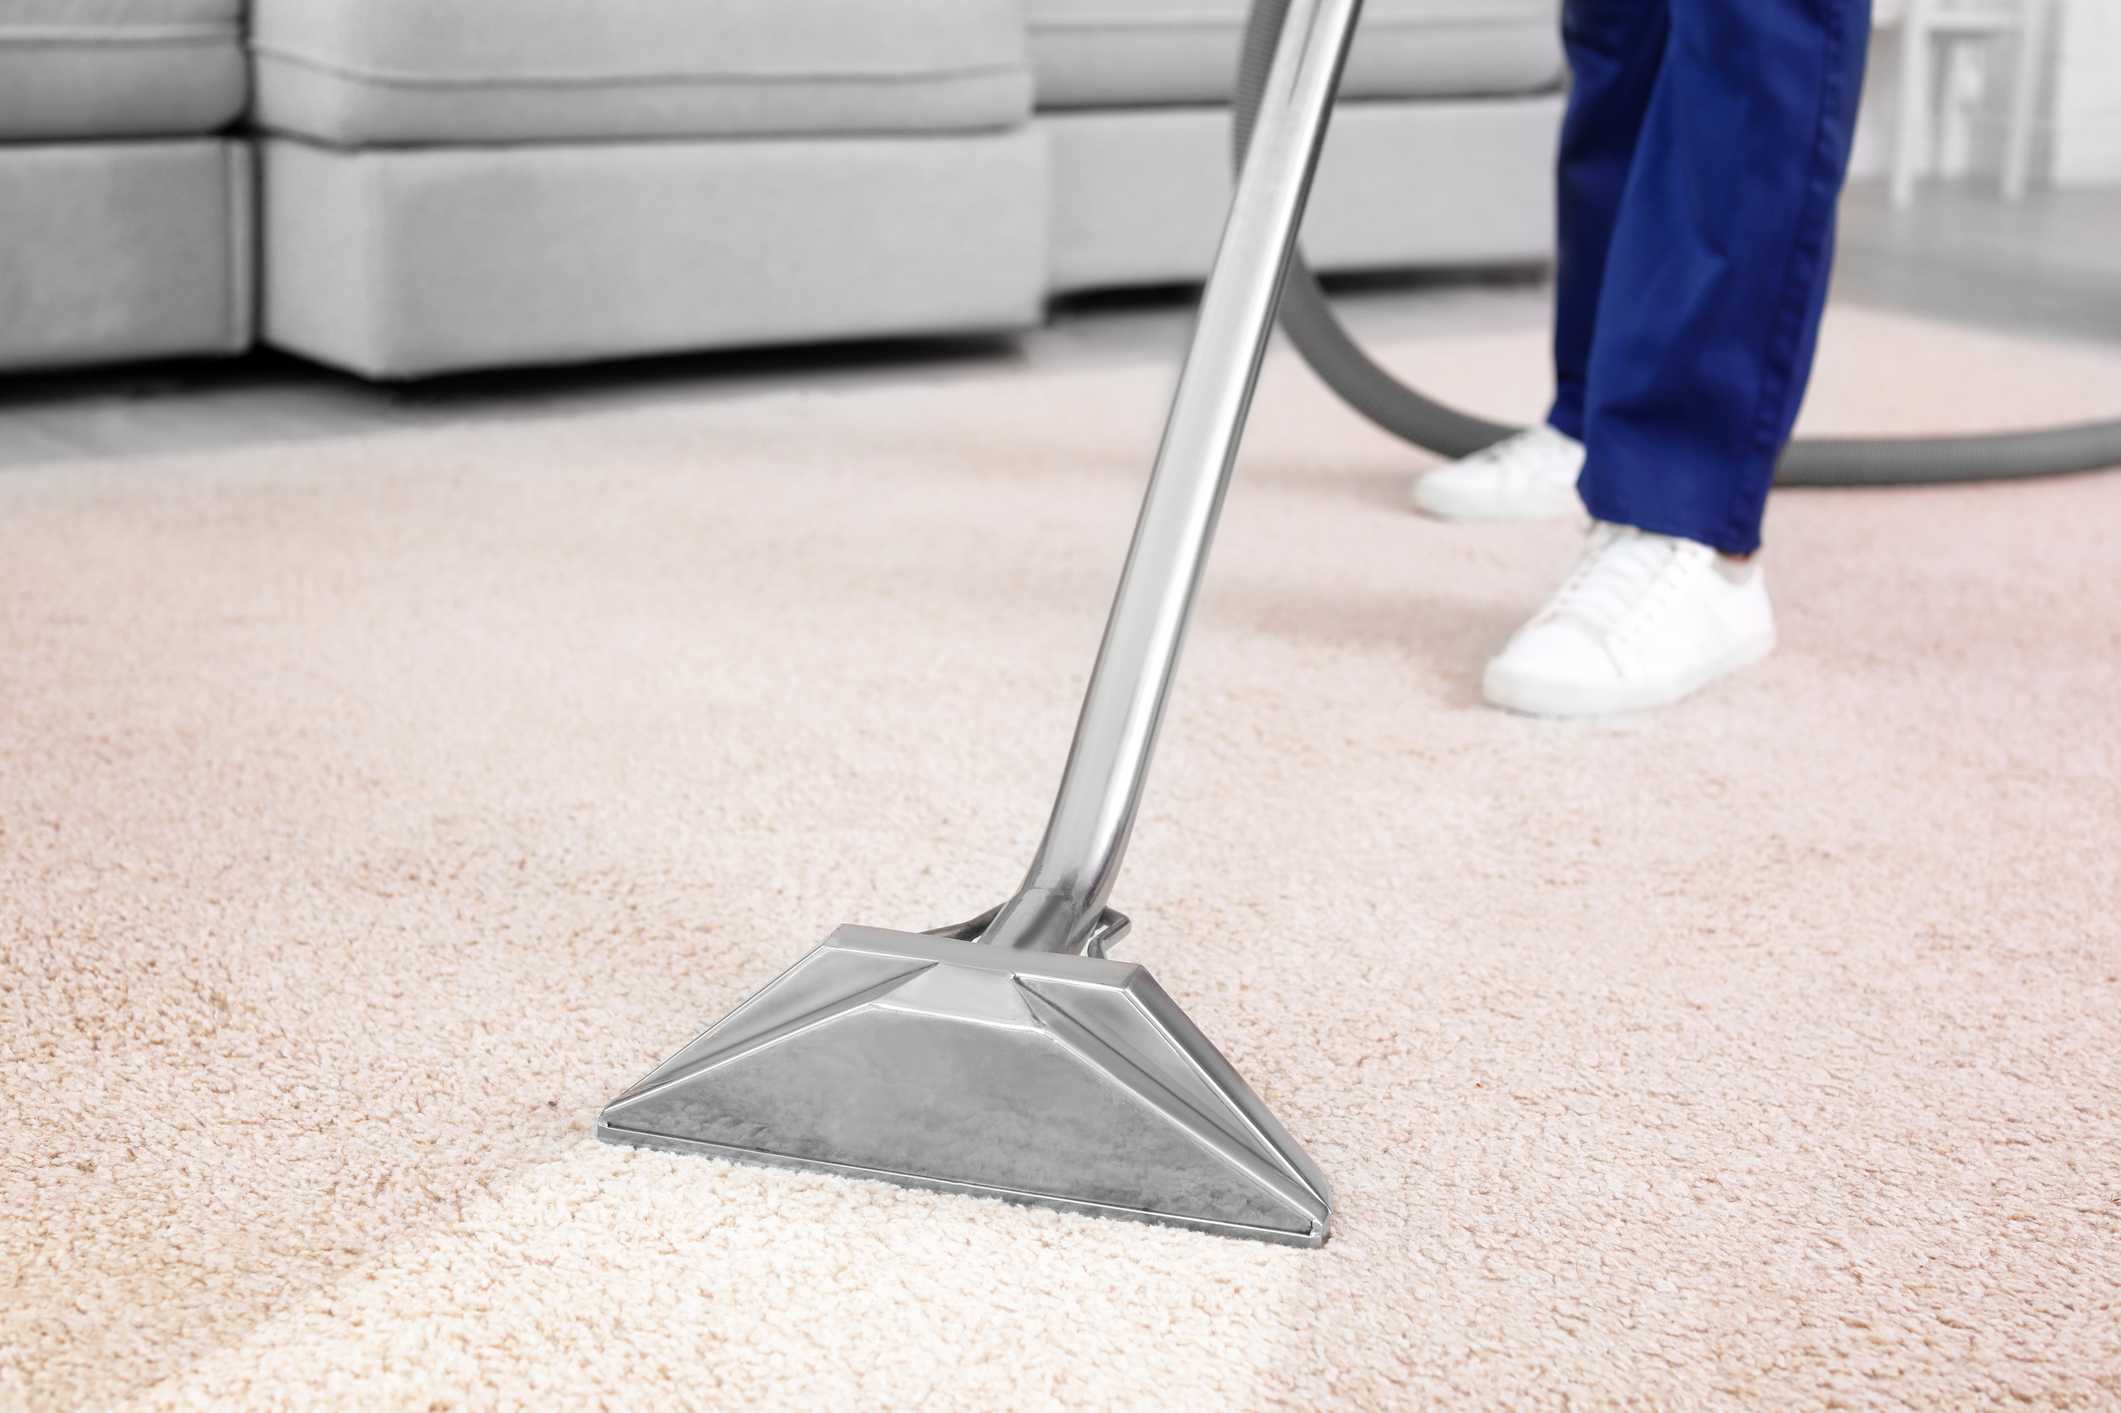 An individual uses a vacuum to clean their white carpet